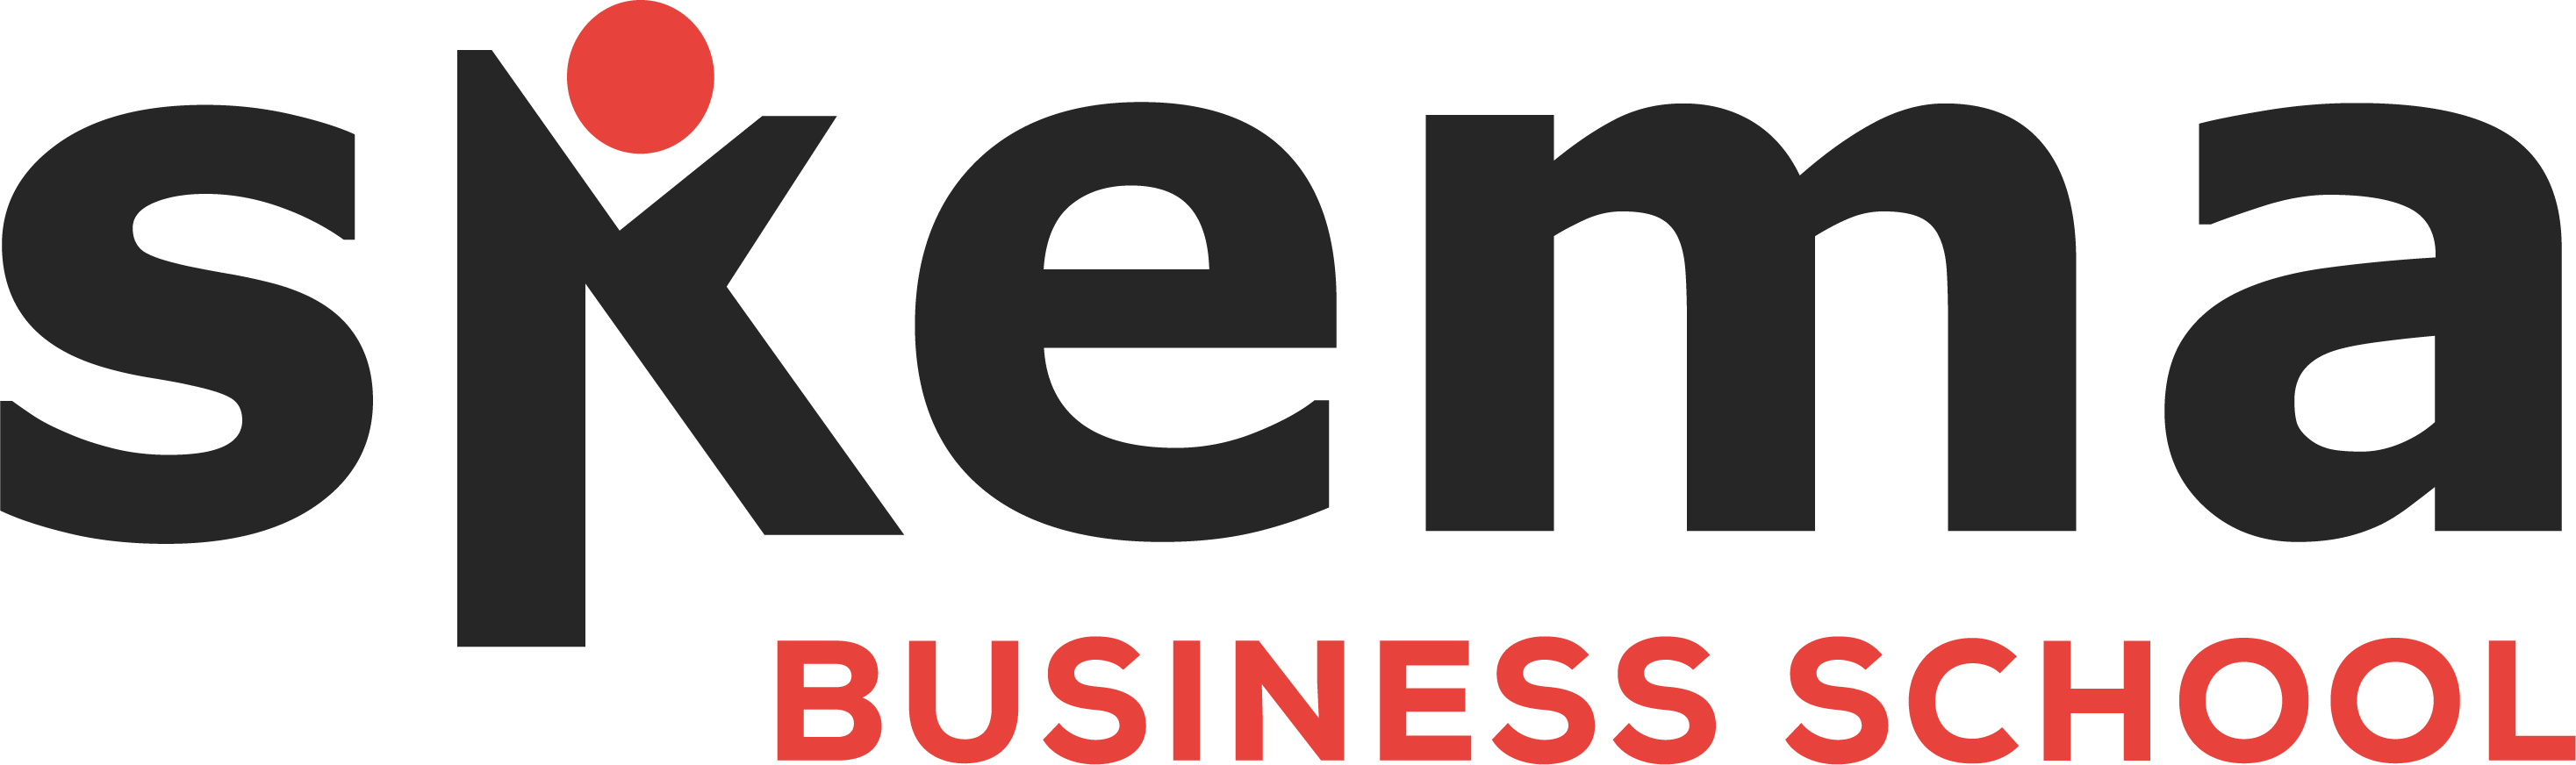 Logo SKEMA Business School